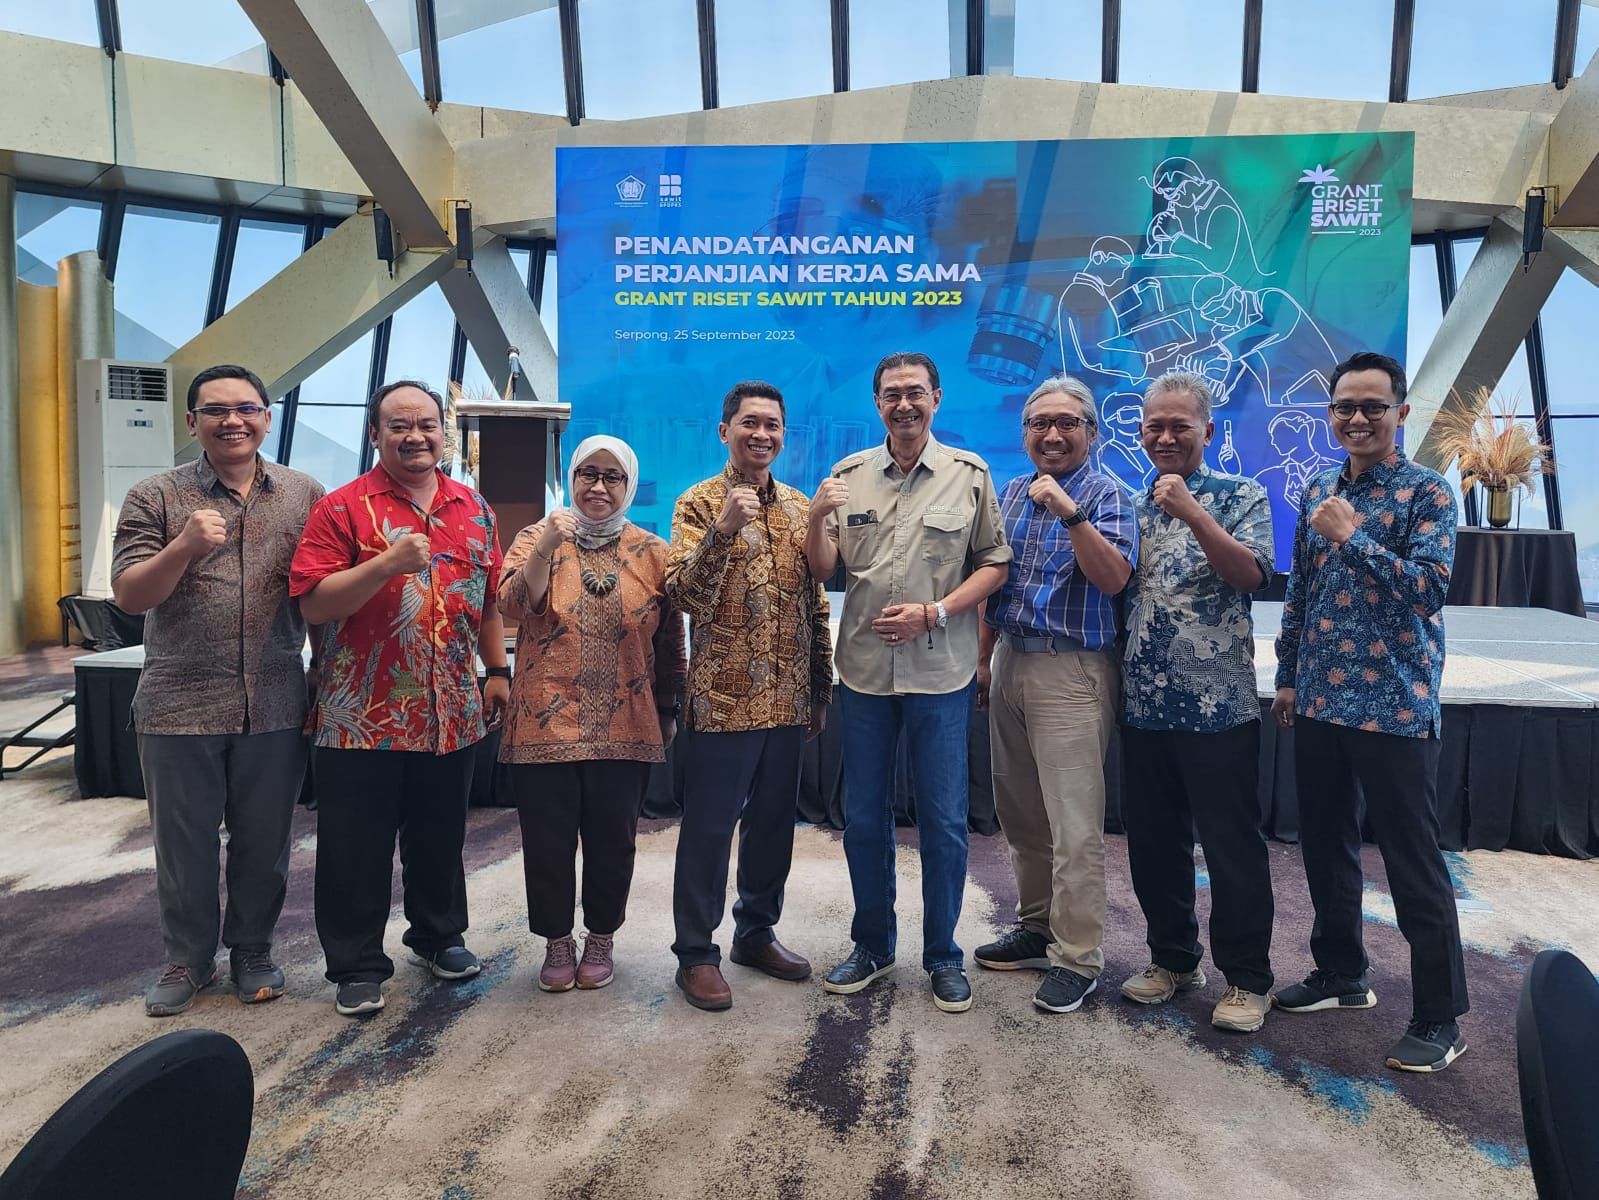 Wakil Rektor IV ITS Bambang Pramujati ST MSc Eng PhD (empat dari kiri) bersama segenap peneliti saat penandatanganan perjanjian kerjasama Grant Riset Sawit 2023, di Hotel JHL Solitaire Gading, Serpong, Senin (25/9)